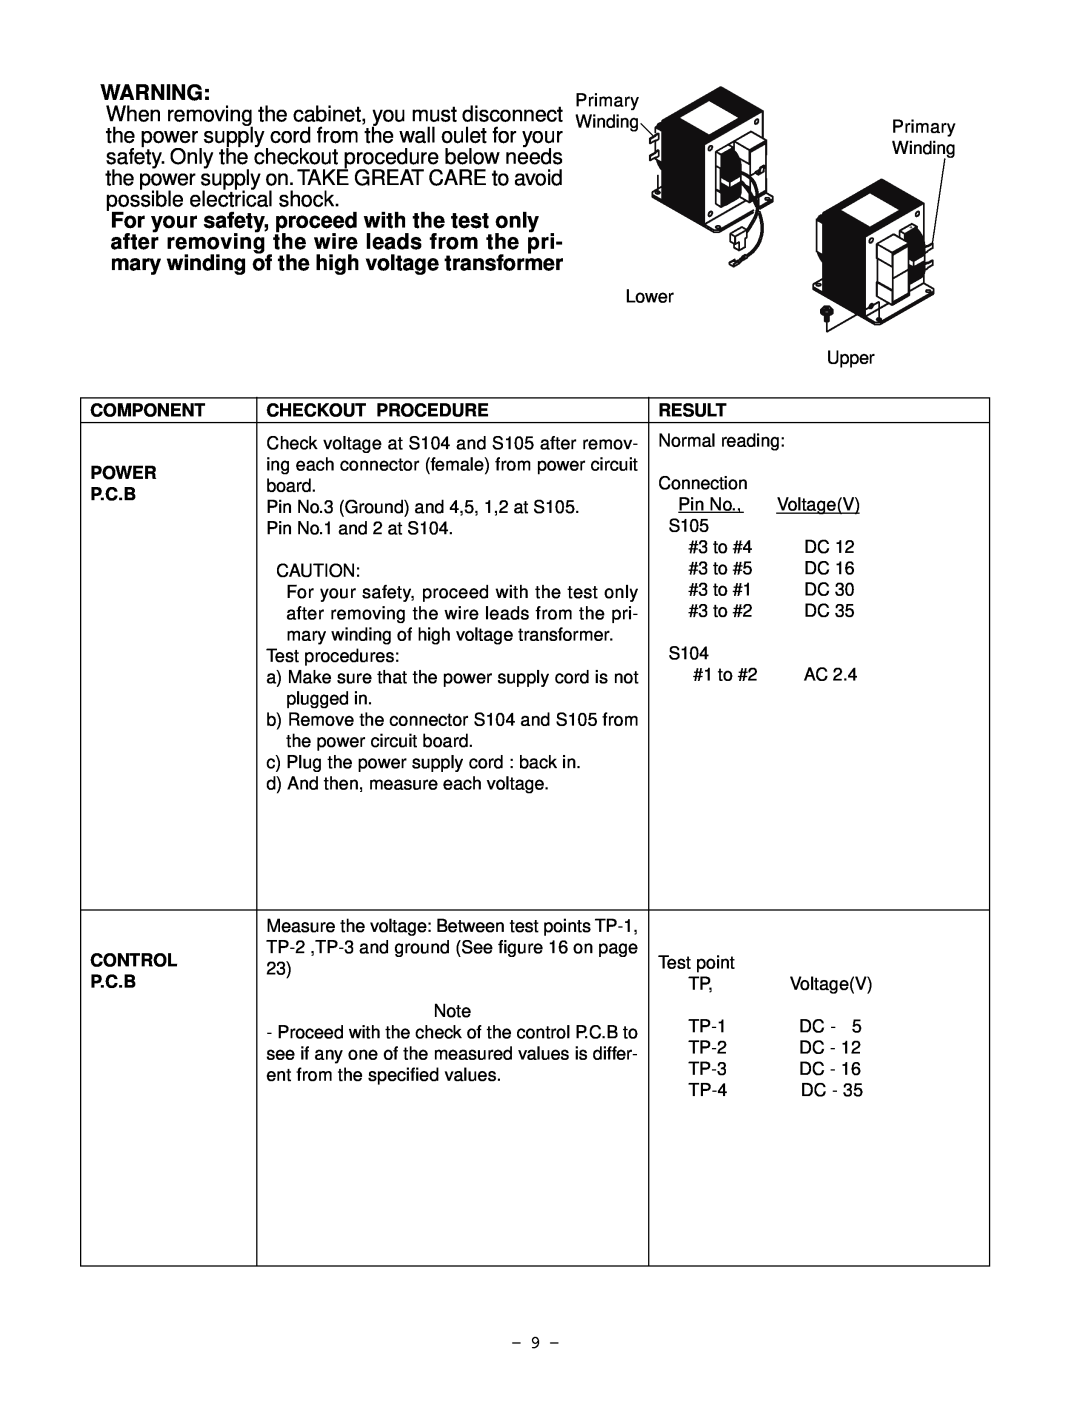 Garland EM-C180 service manual Component, Checkout Procedure, Result, Power, P.C.B, Control 